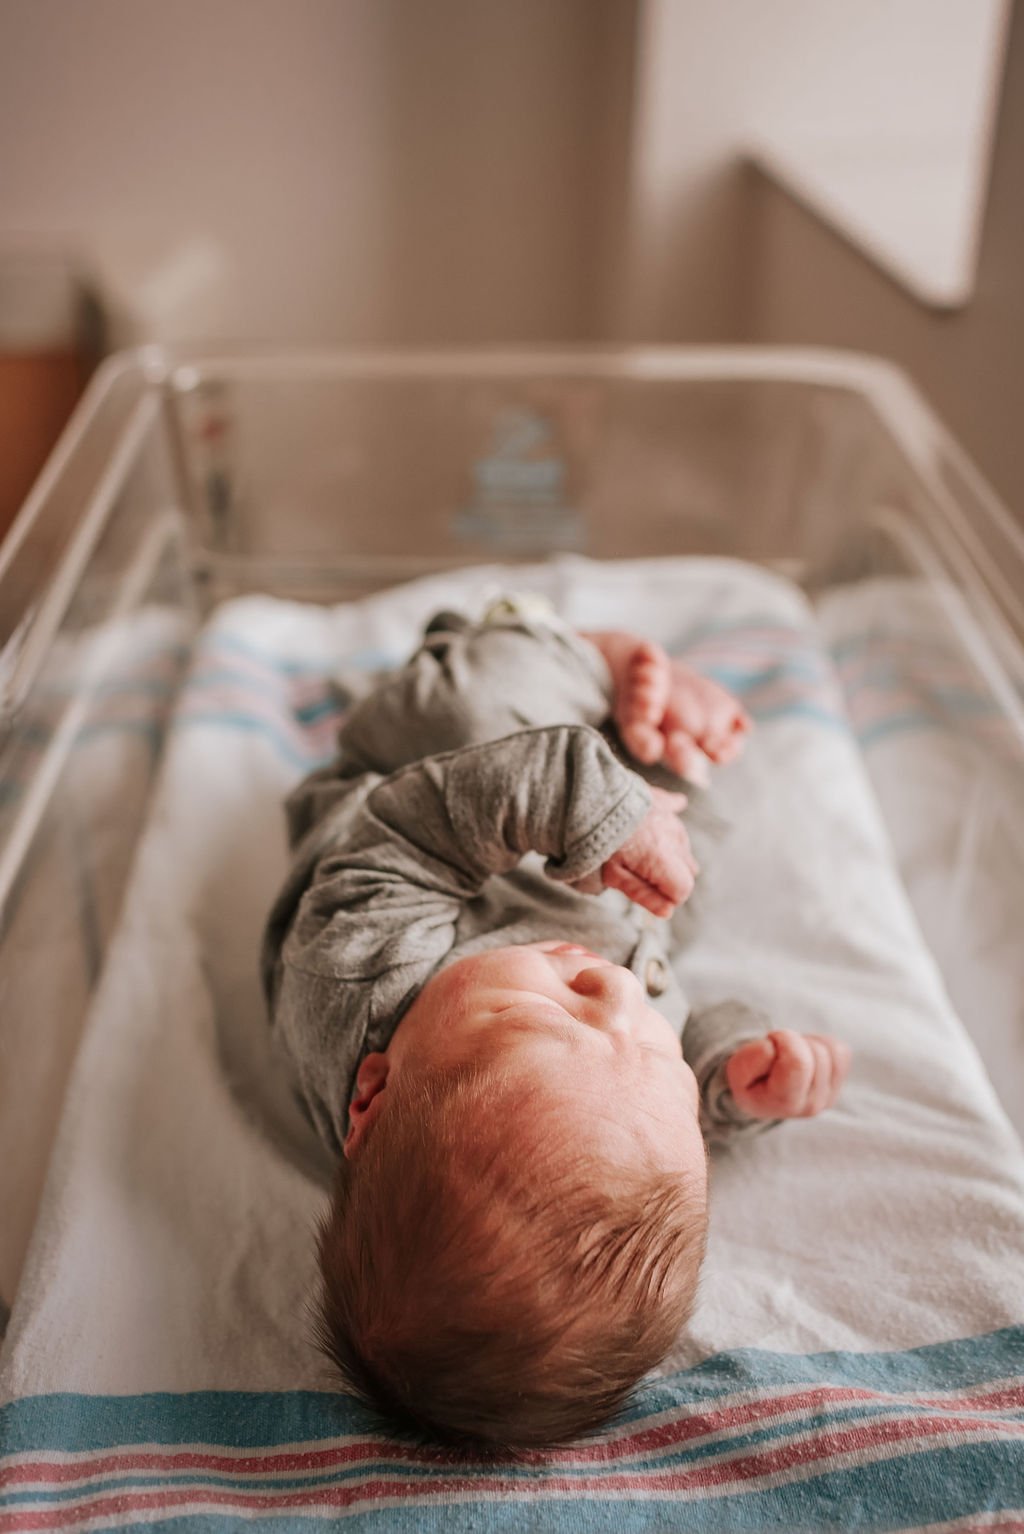 cleveland-ohio-newborn-hospital-family-fresh-48-birth-photographer27.jpg